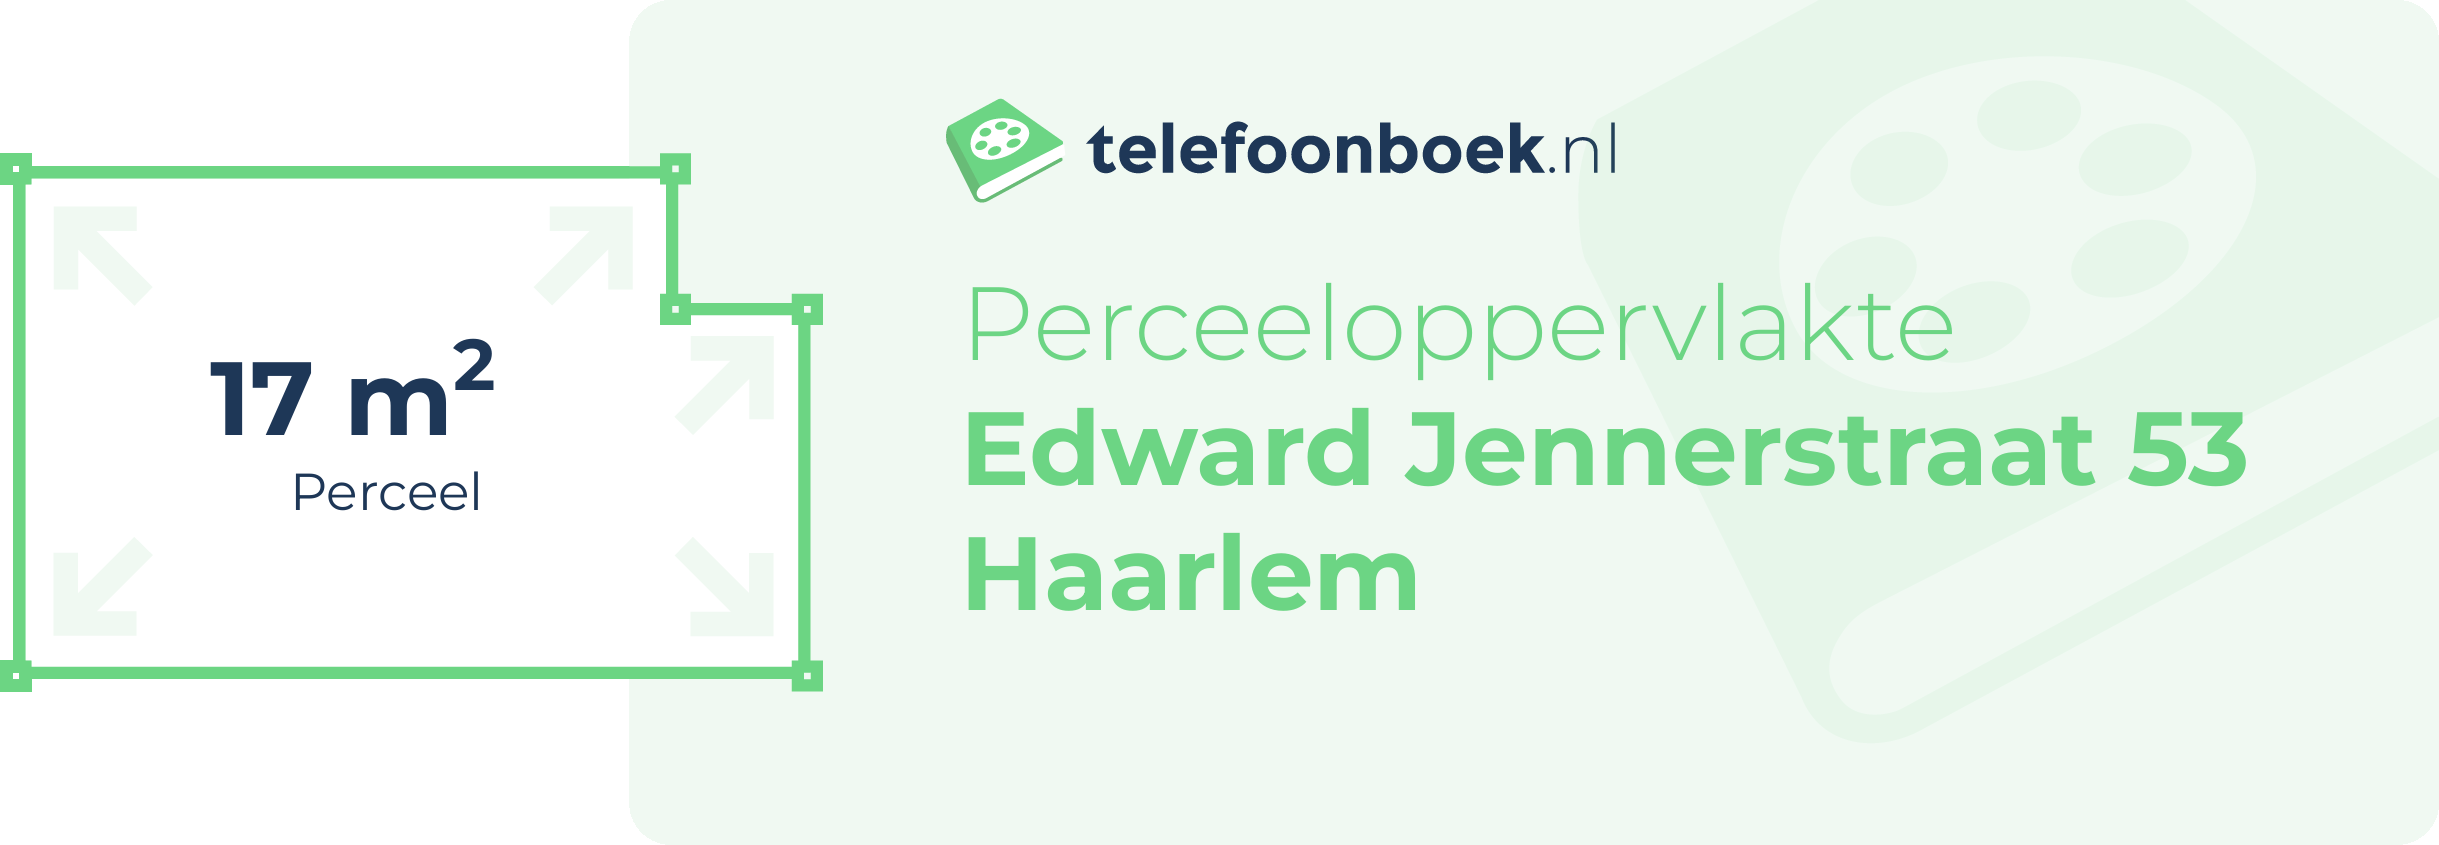 Perceeloppervlakte Edward Jennerstraat 53 Haarlem